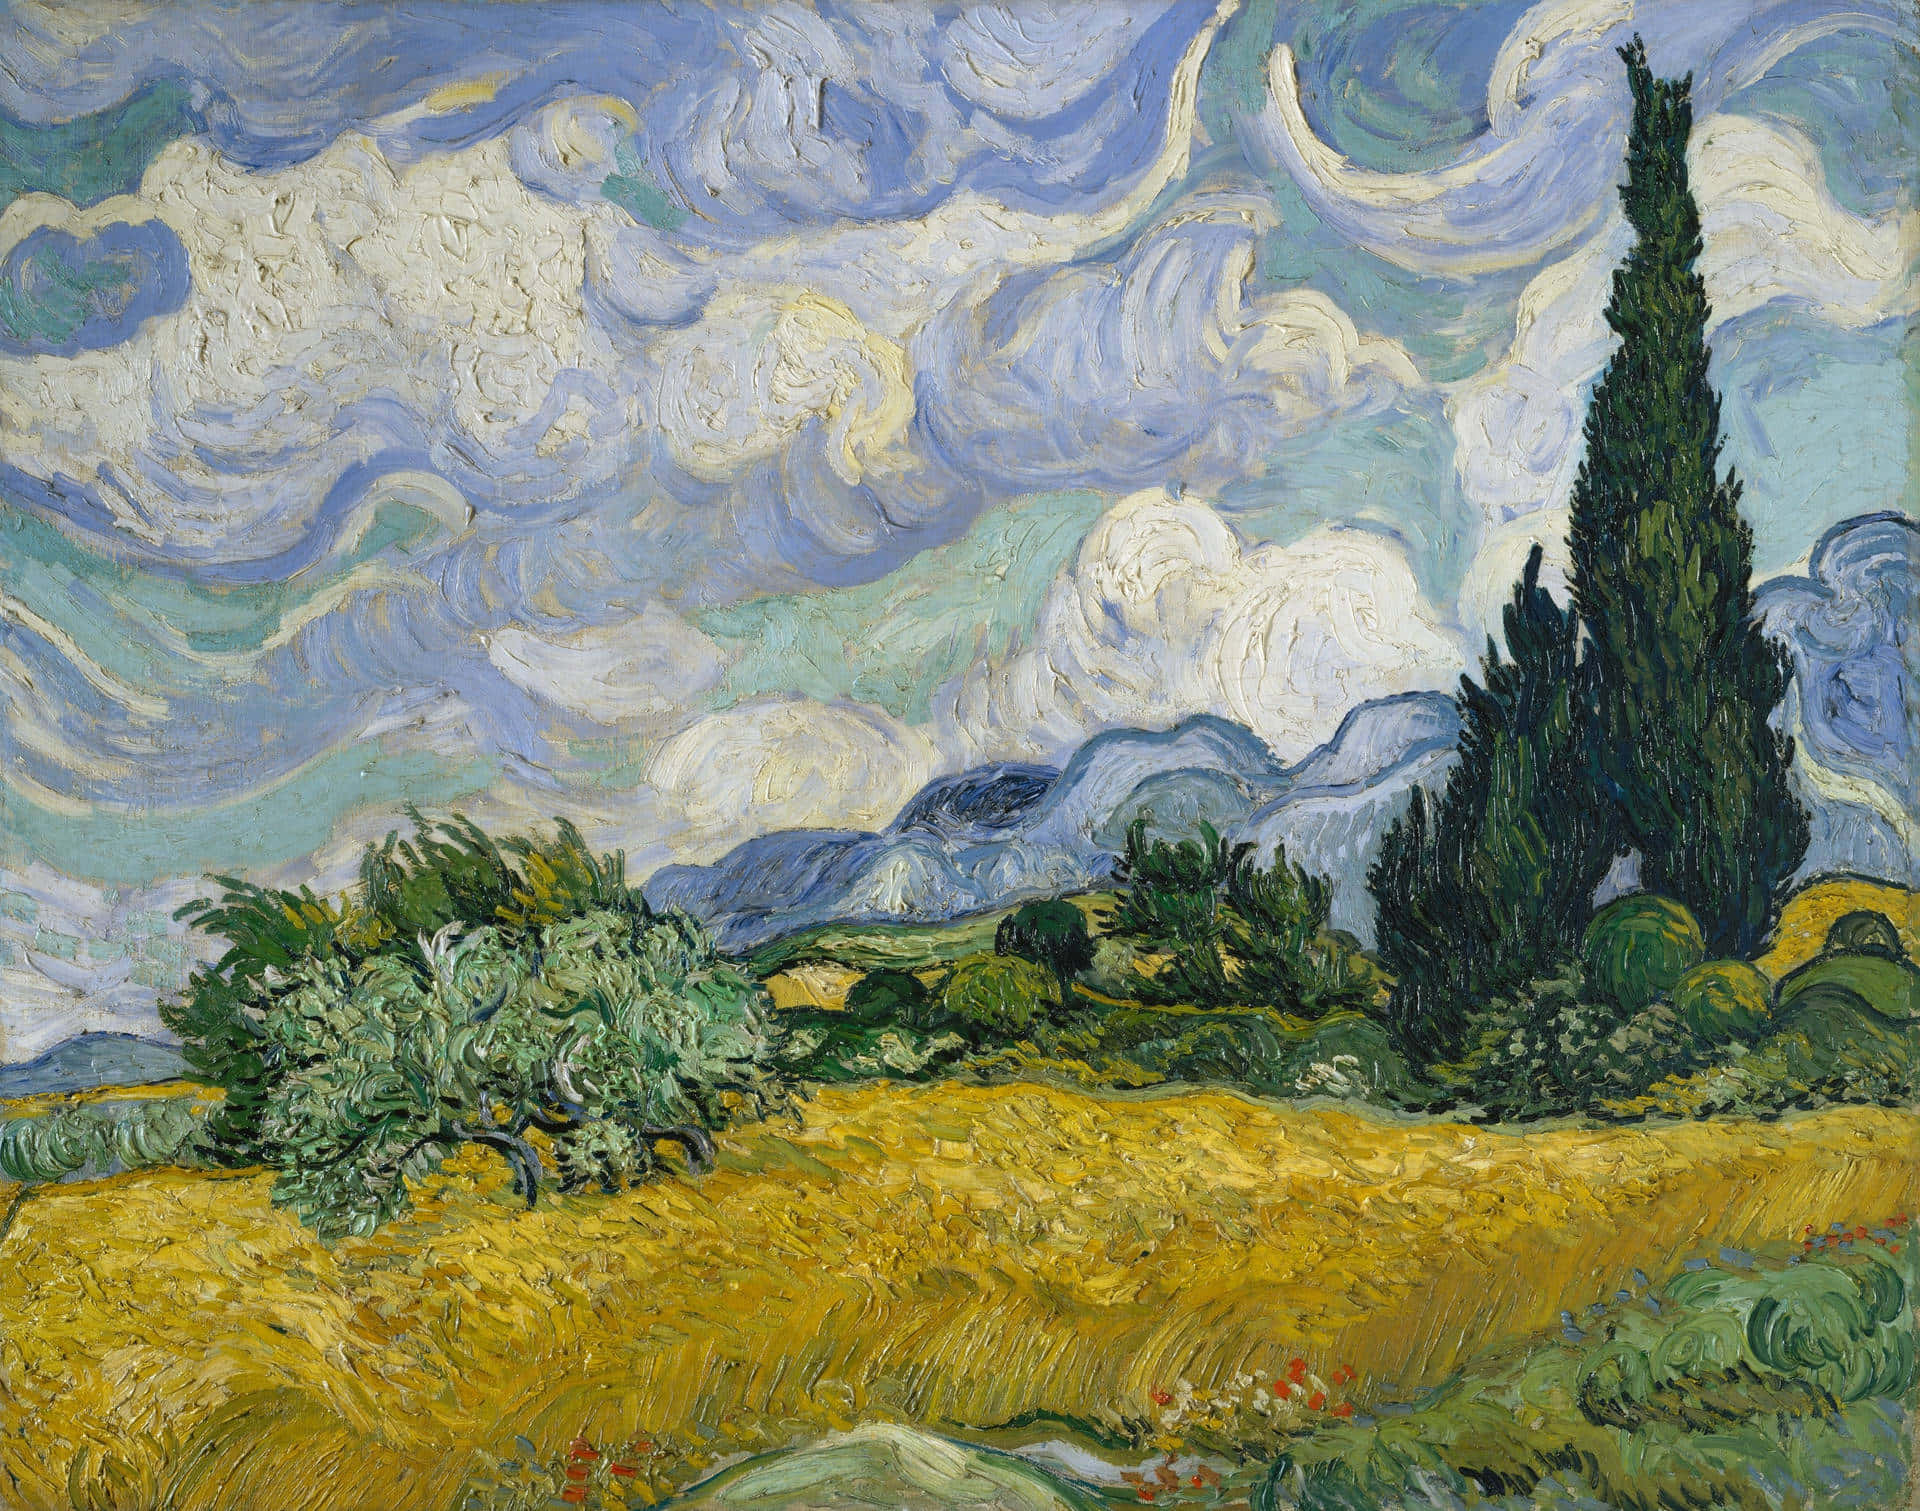 The Exuberant Brushstrokes of Vincent Van Gogh